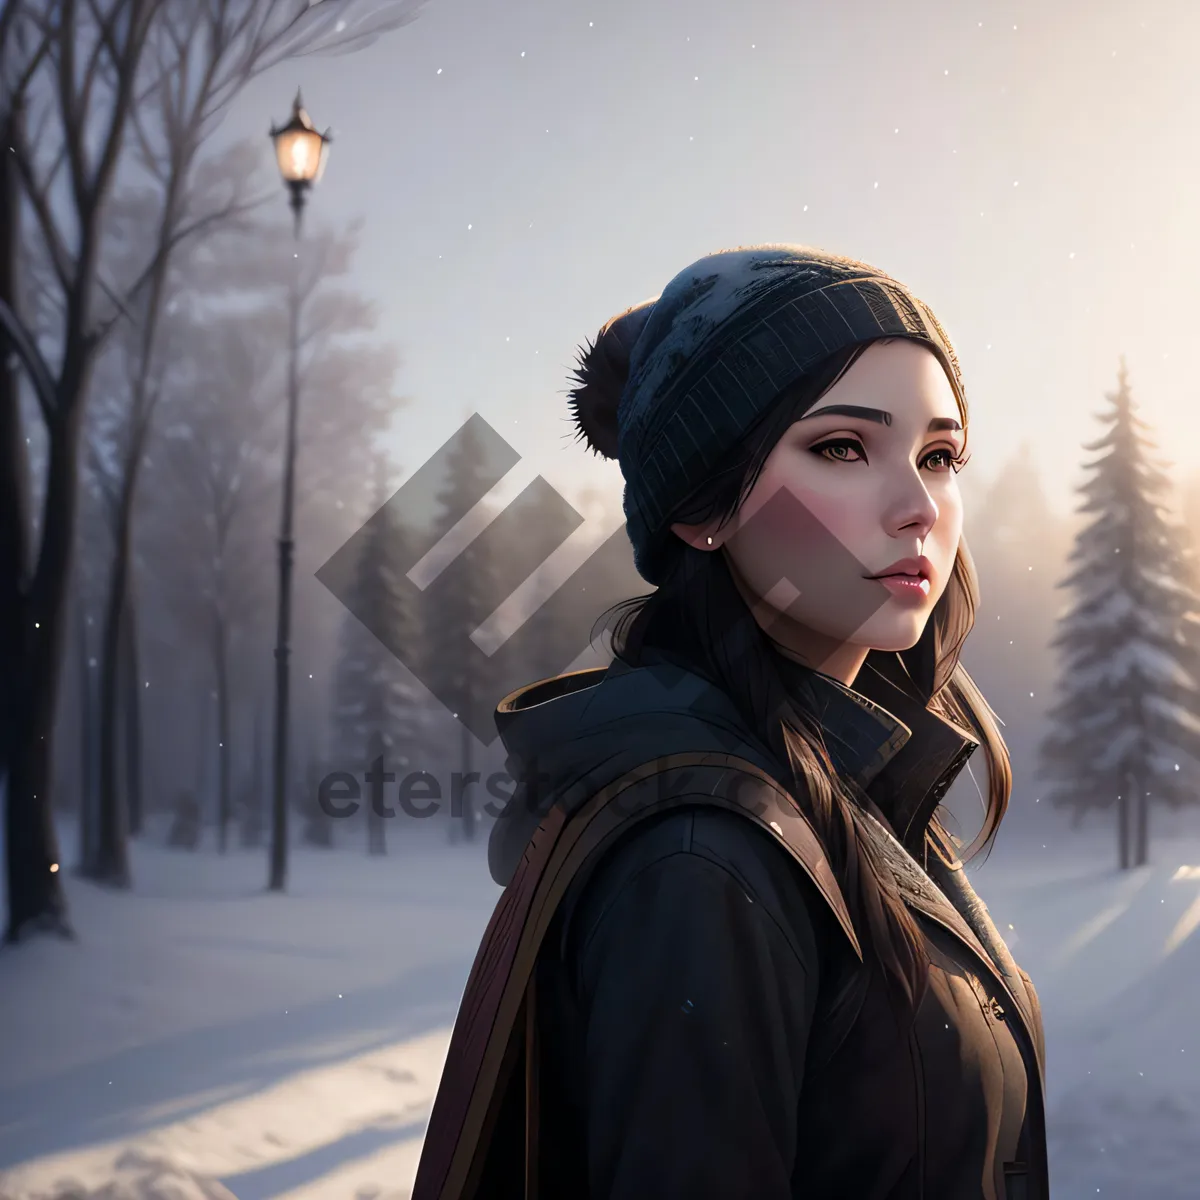 Picture of Winter Wonderland: Adventurous Traveler Embracing the Snowy Landscape